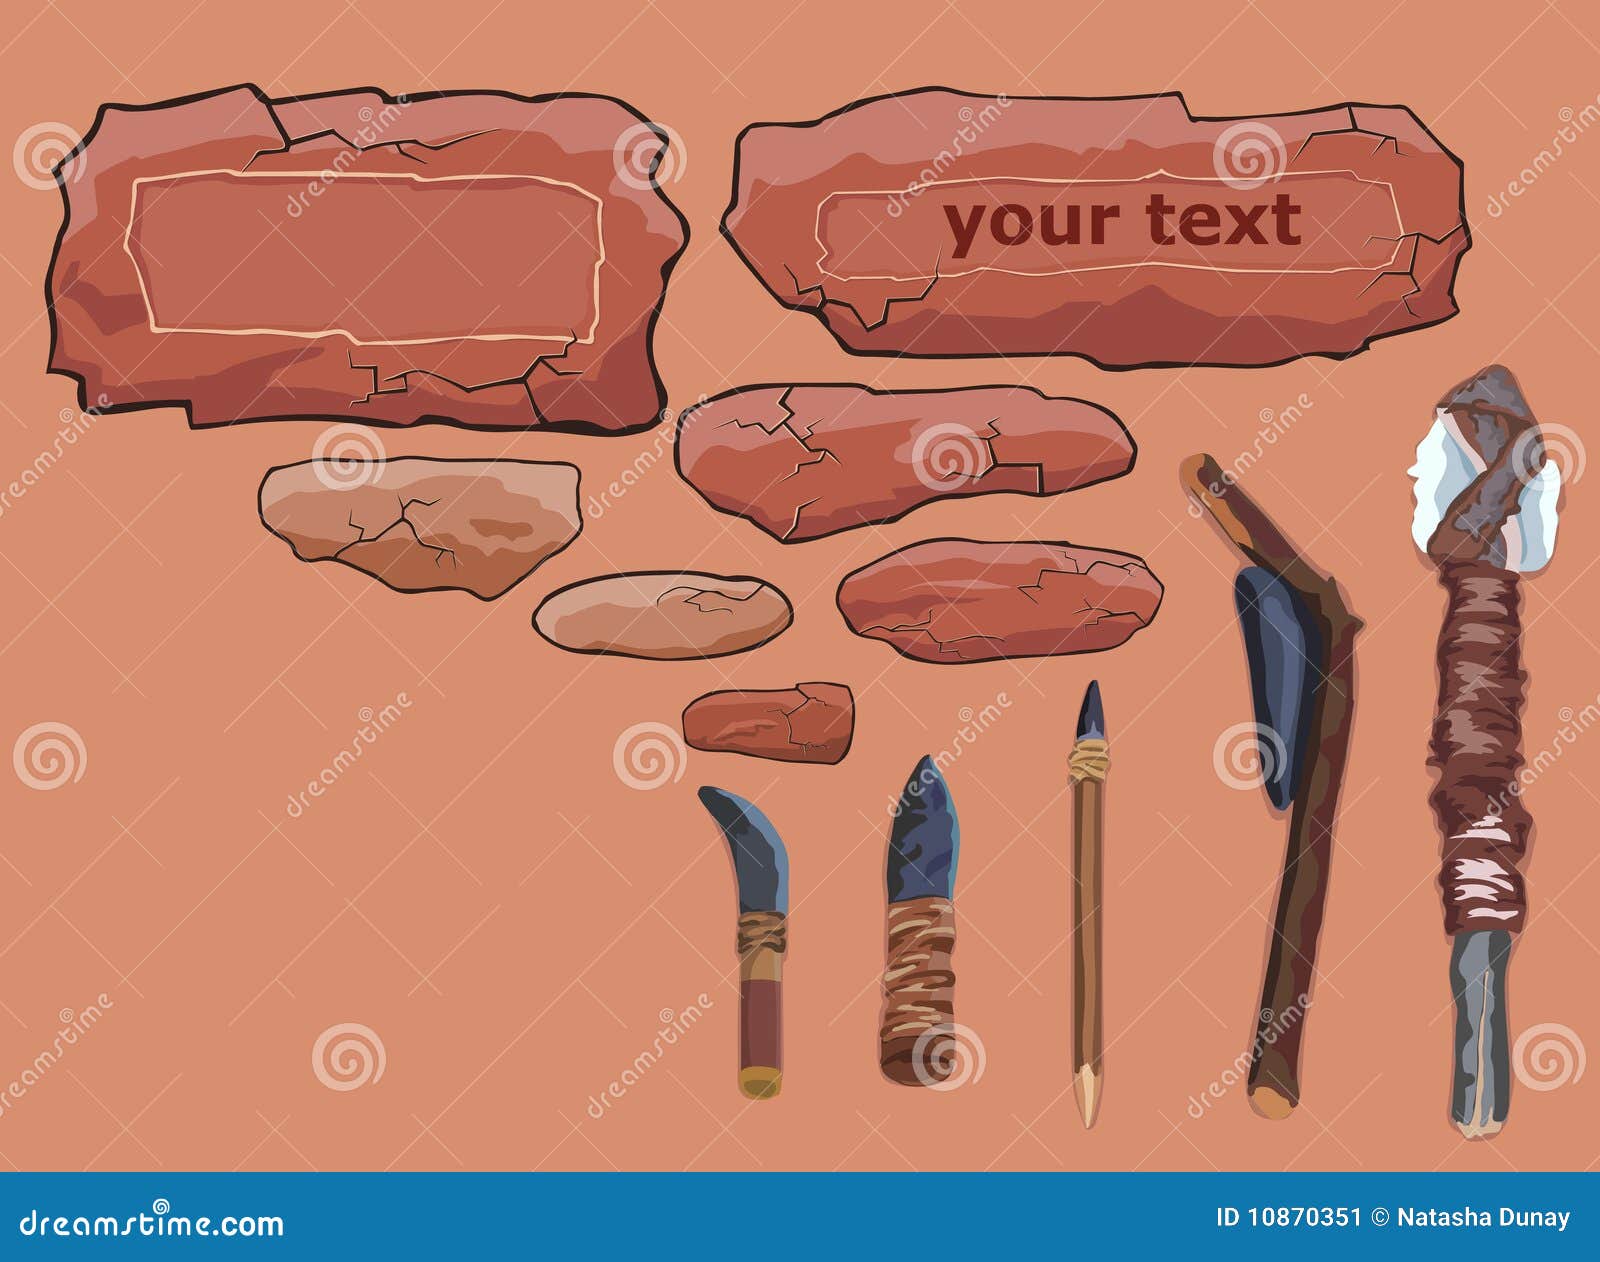 Hunting Tools Stock Illustrations – 1,576 Hunting Tools Stock